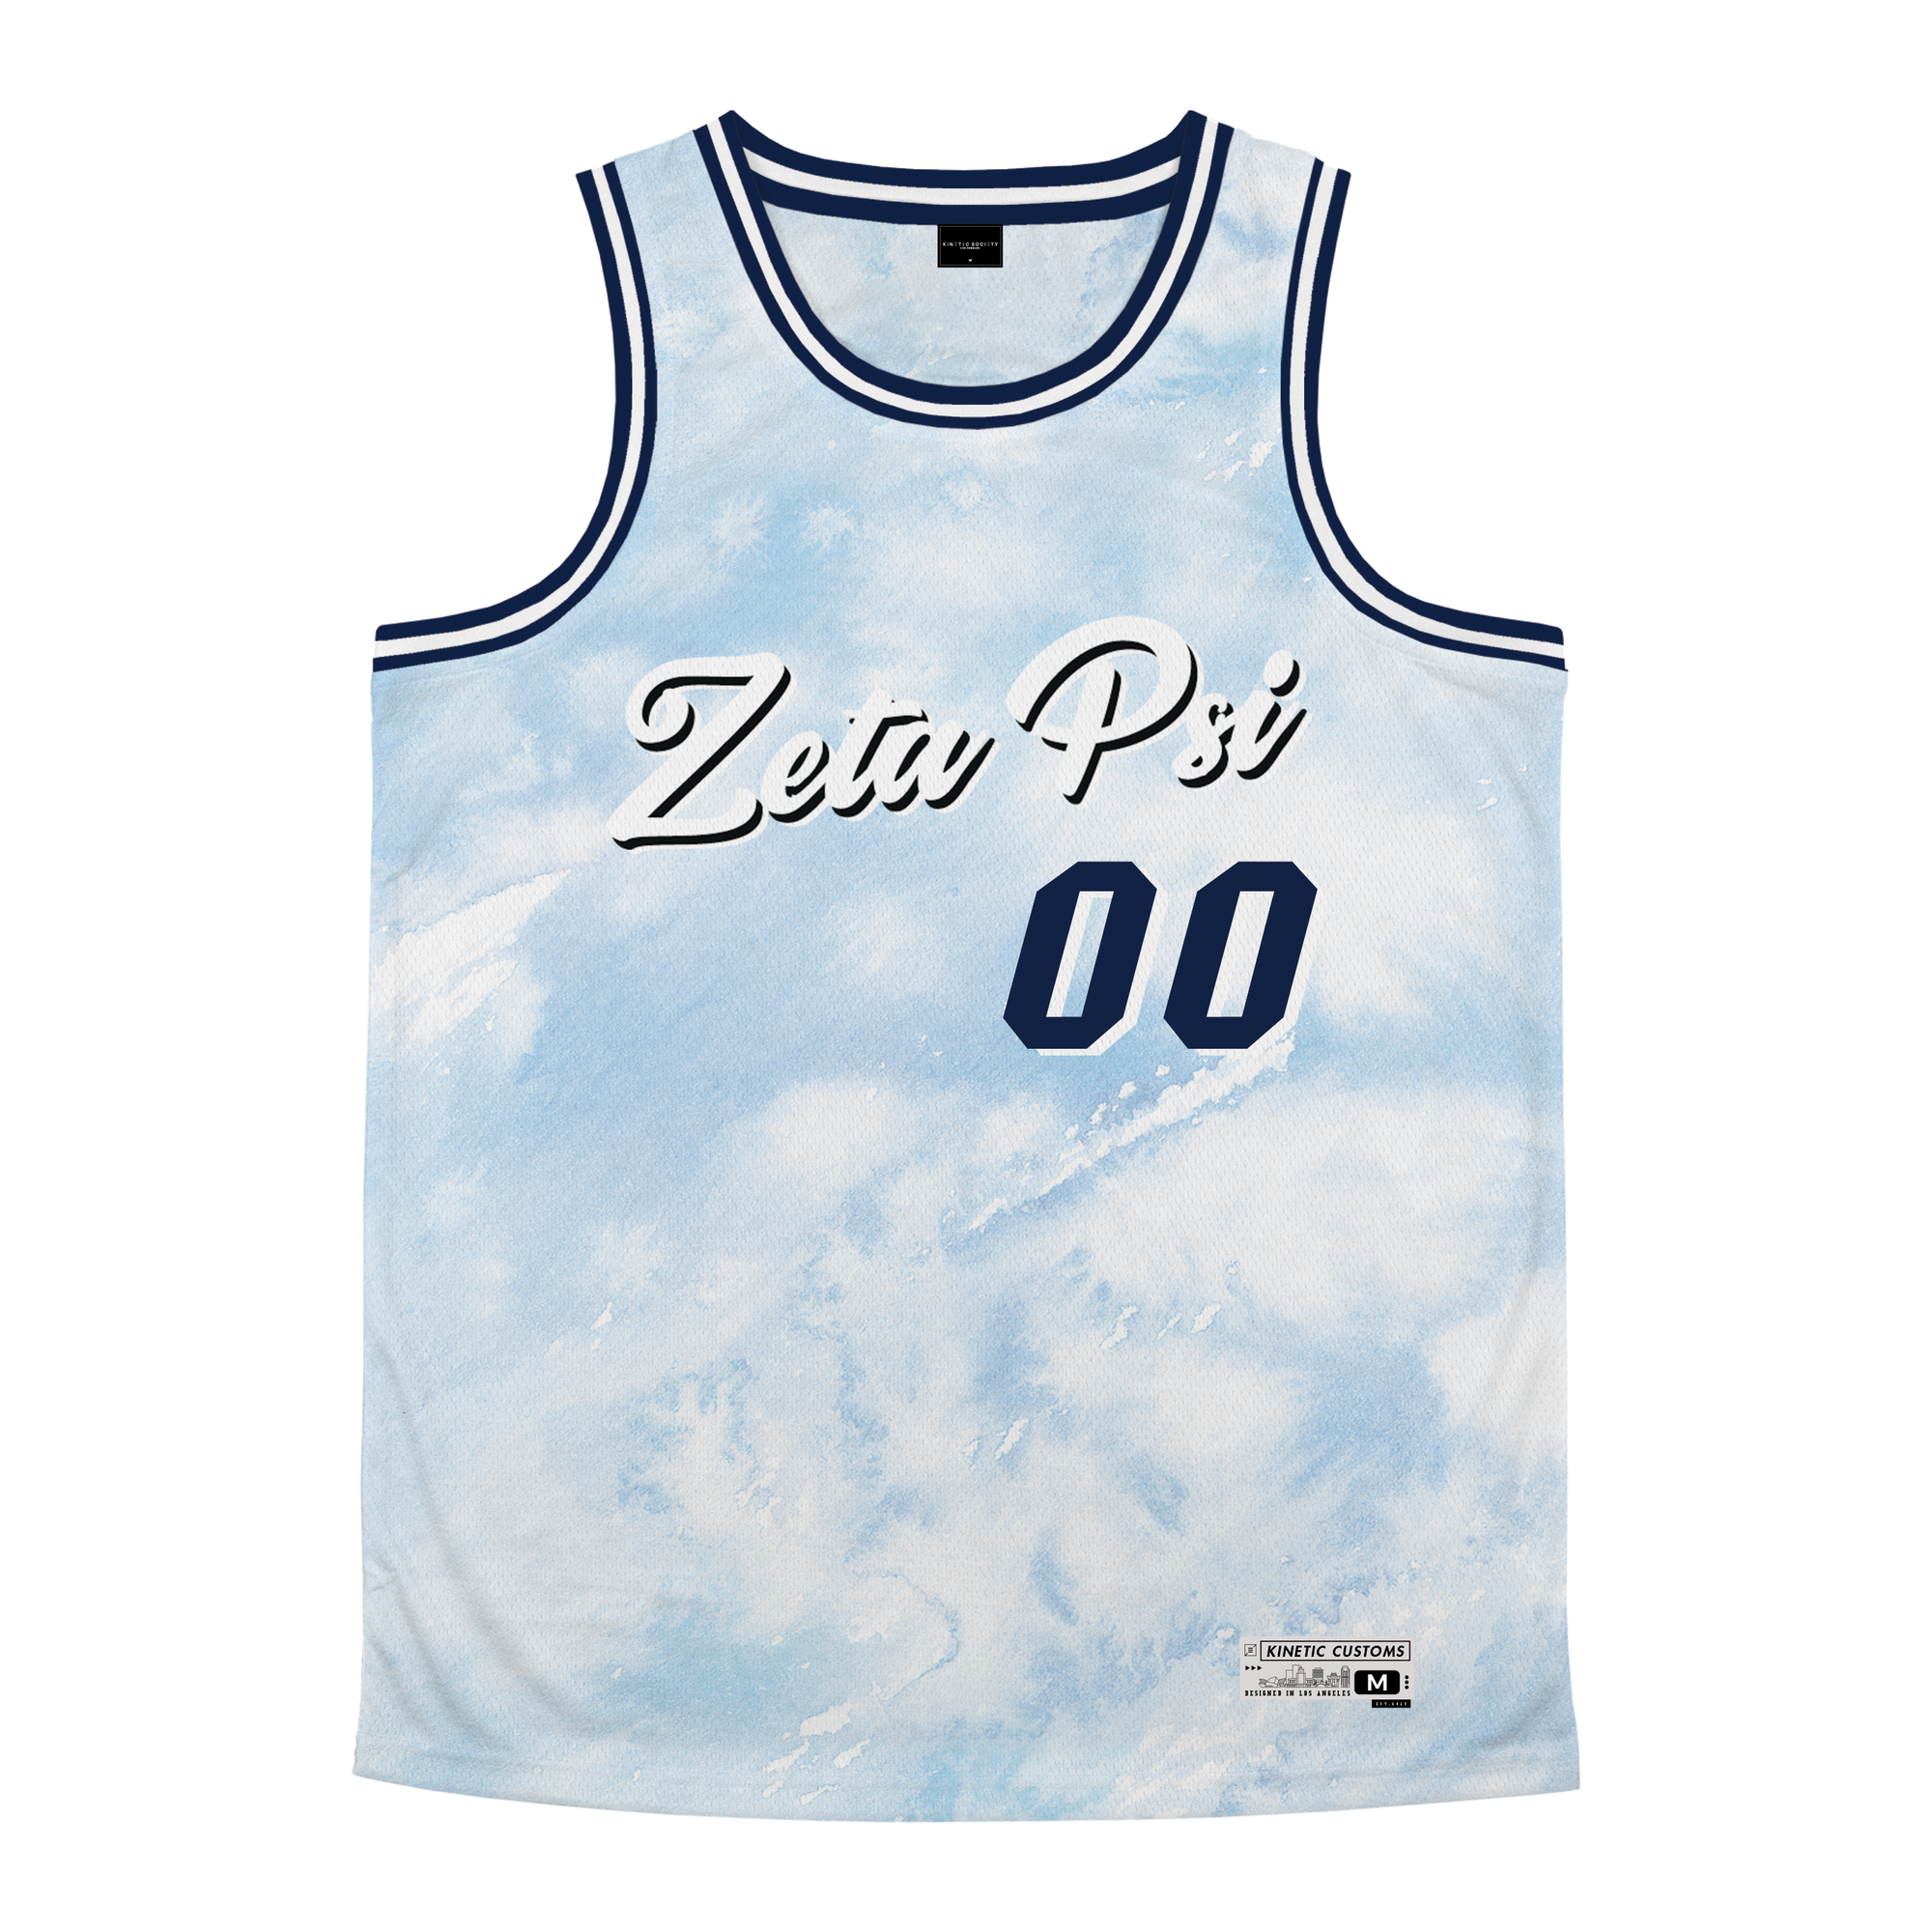 Zeta Psi - Blue Sky Basketball Jersey